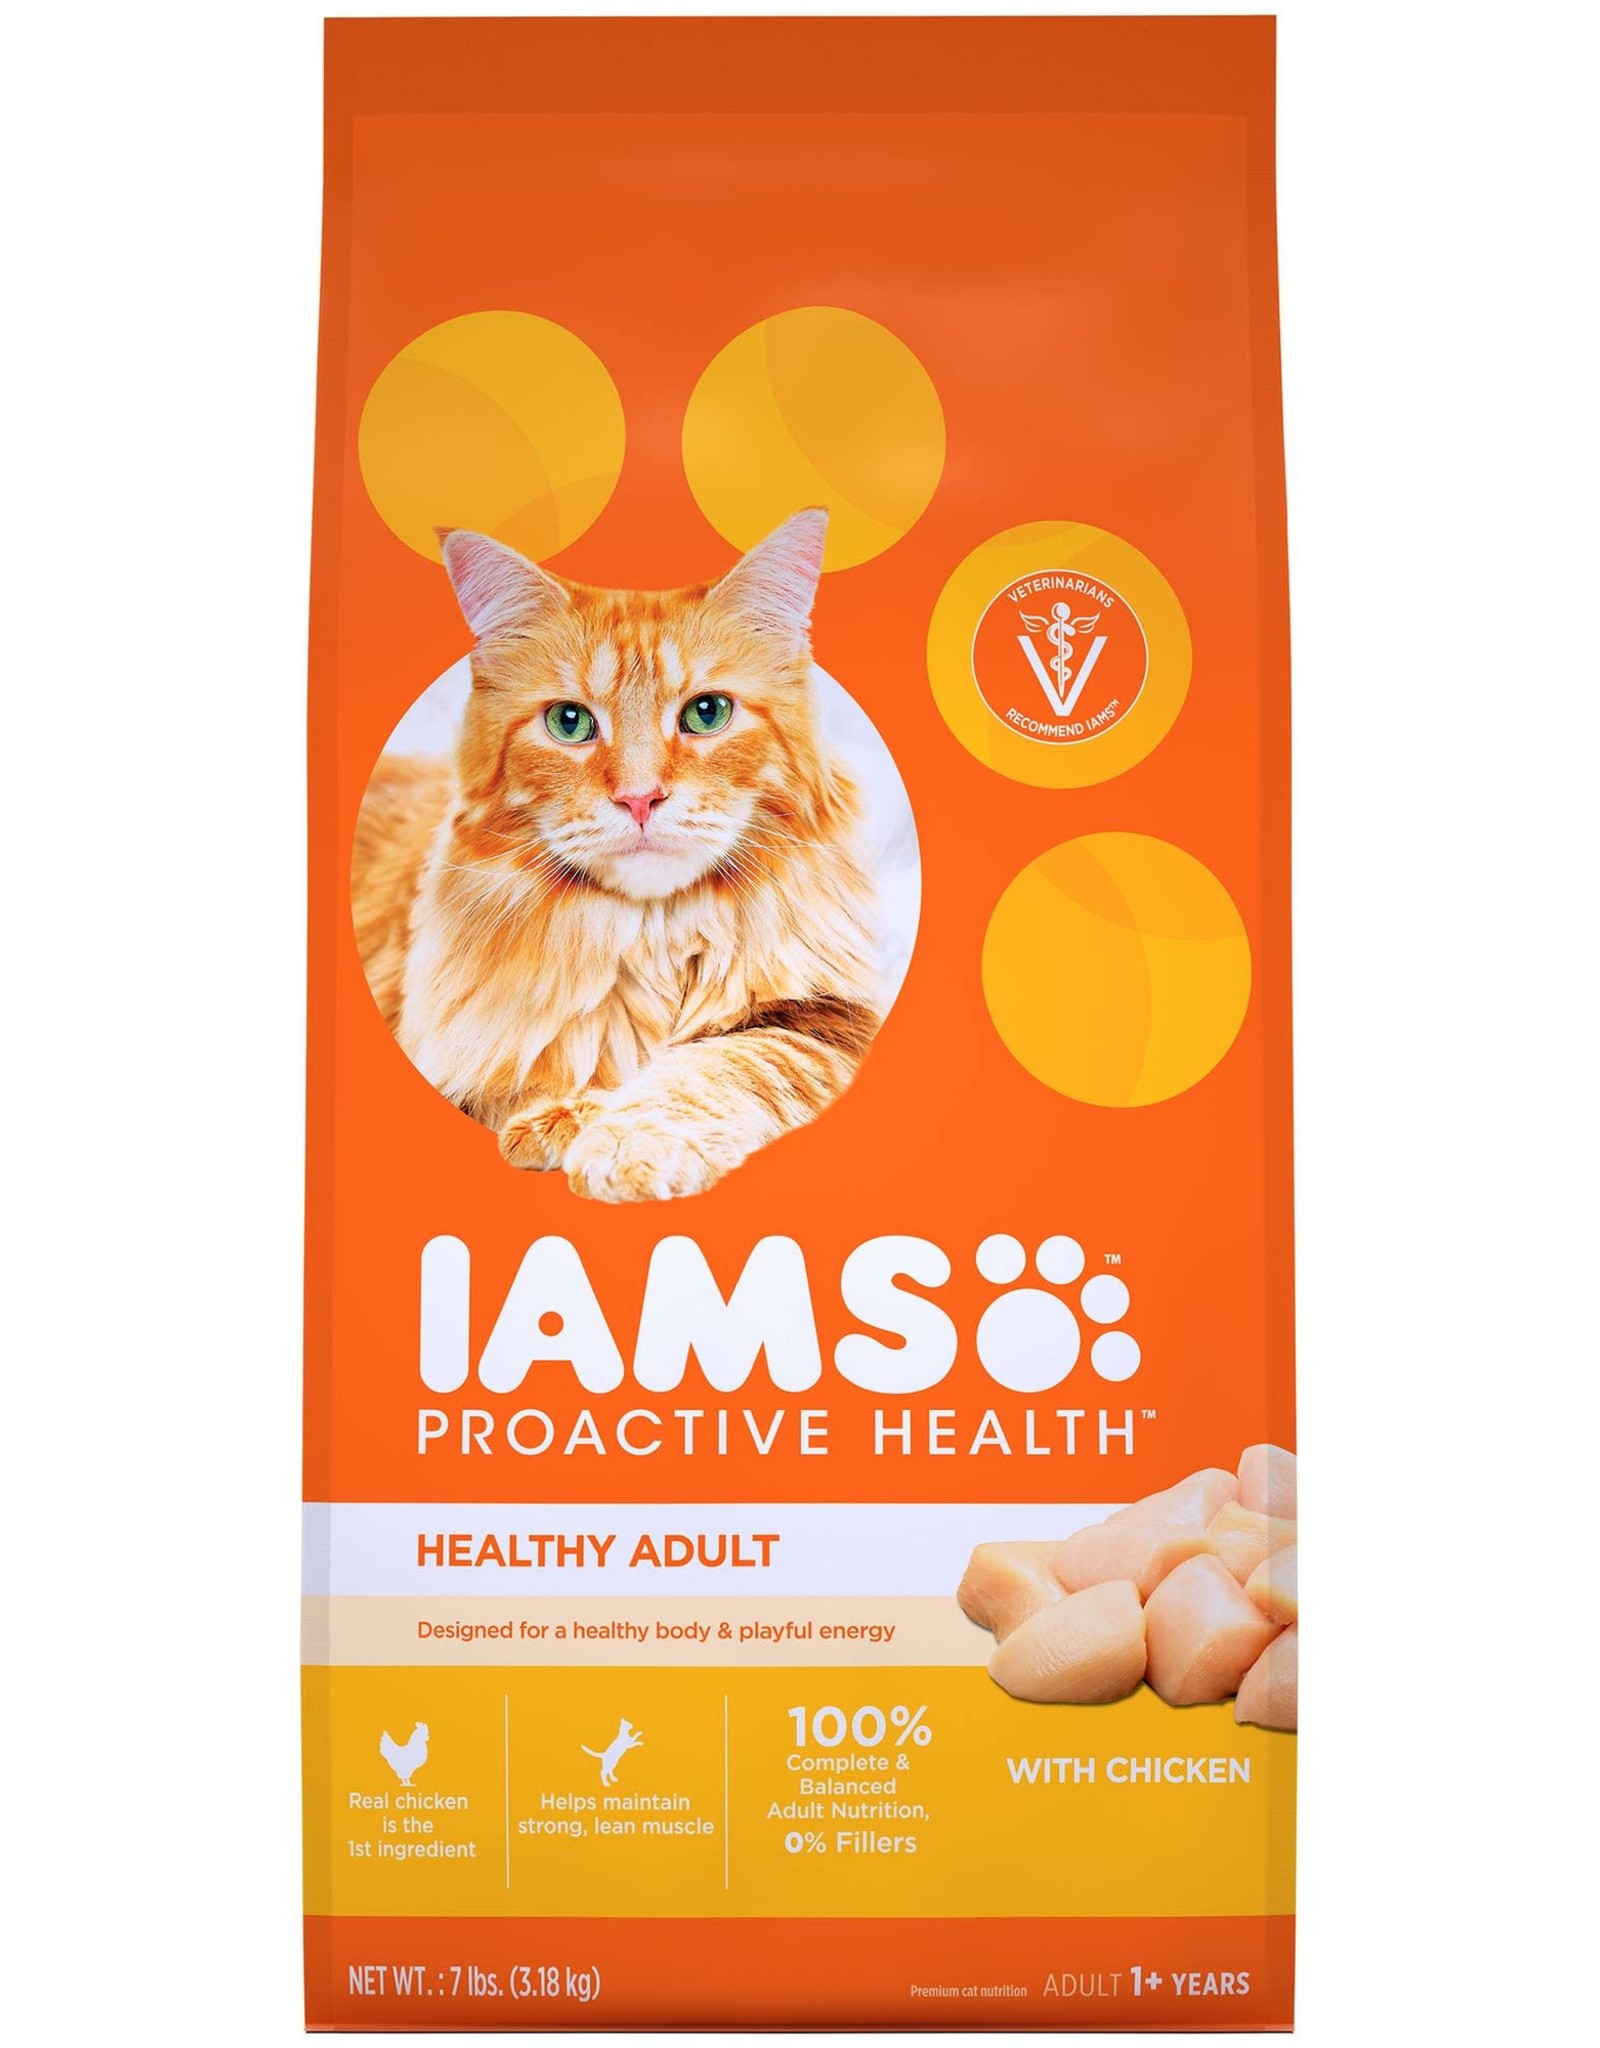 IAMS COMPANY IAMS CAT ORIGINAL CHICKEN 3.5LBS